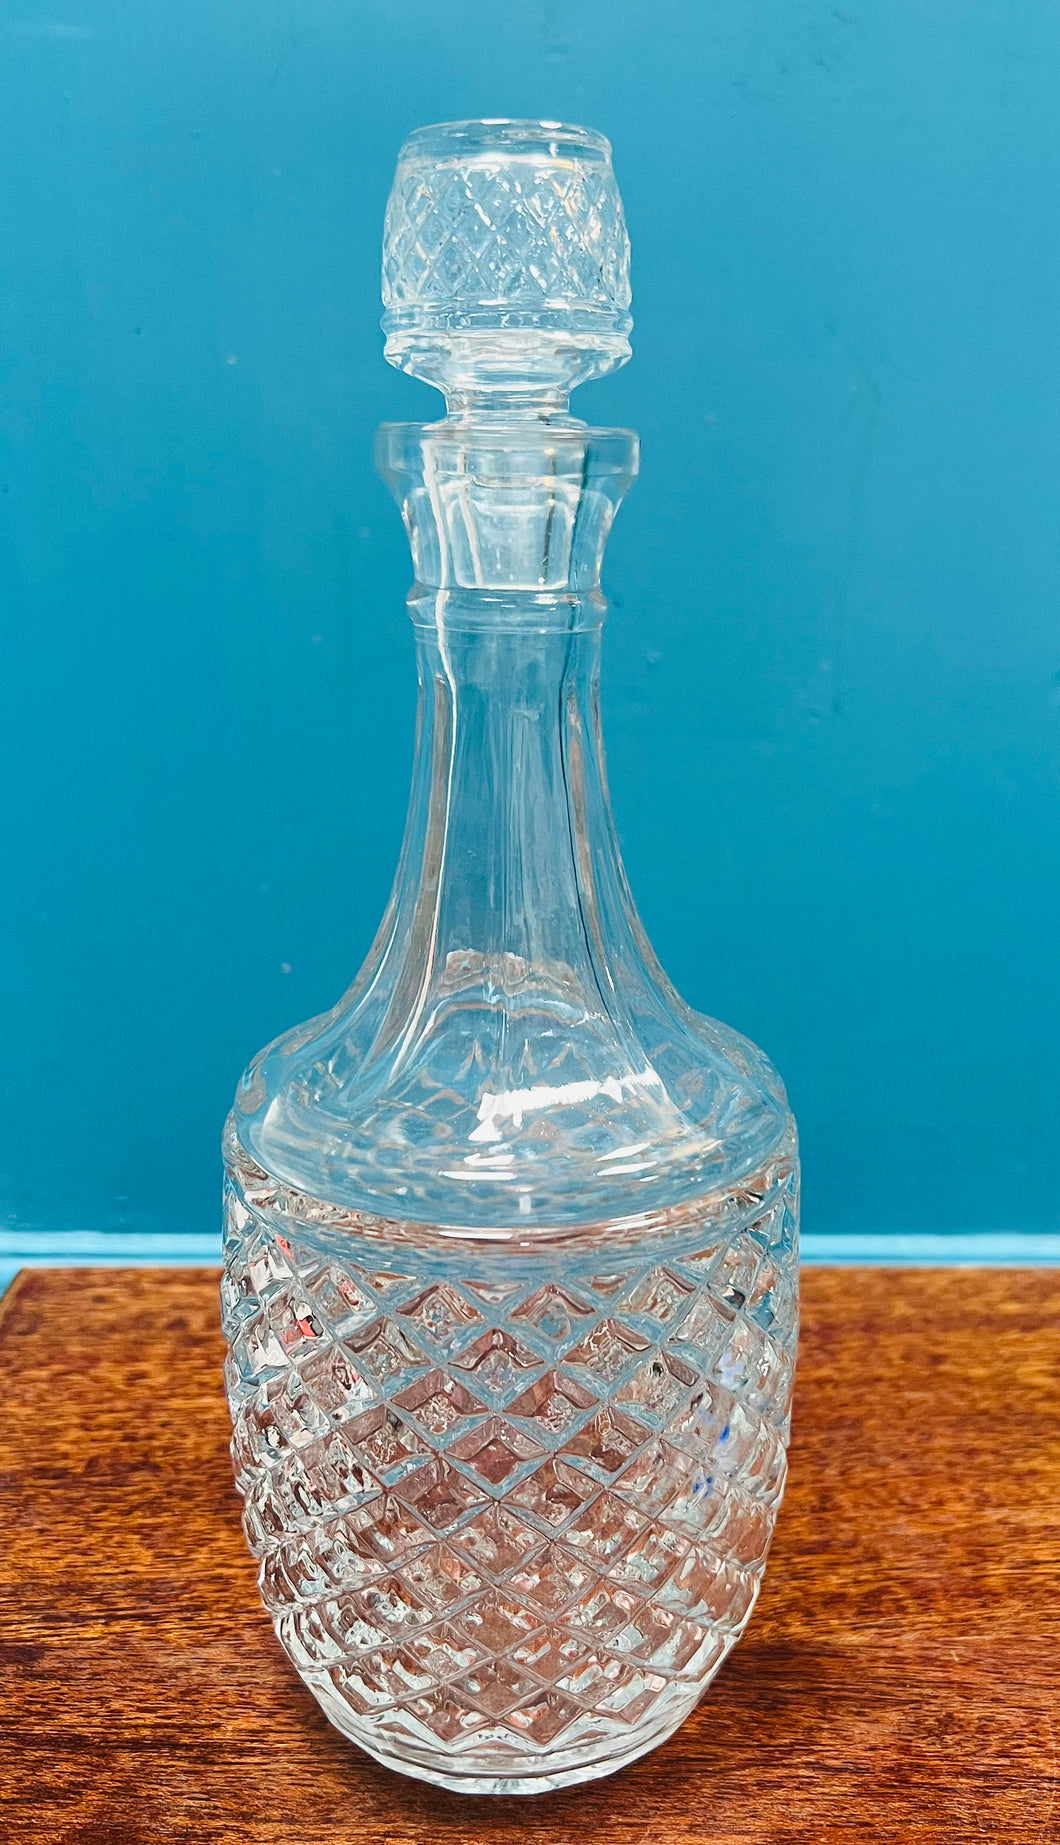 Decanter gwydr Retro o’r 70au / Retro glass decanter from the 70s